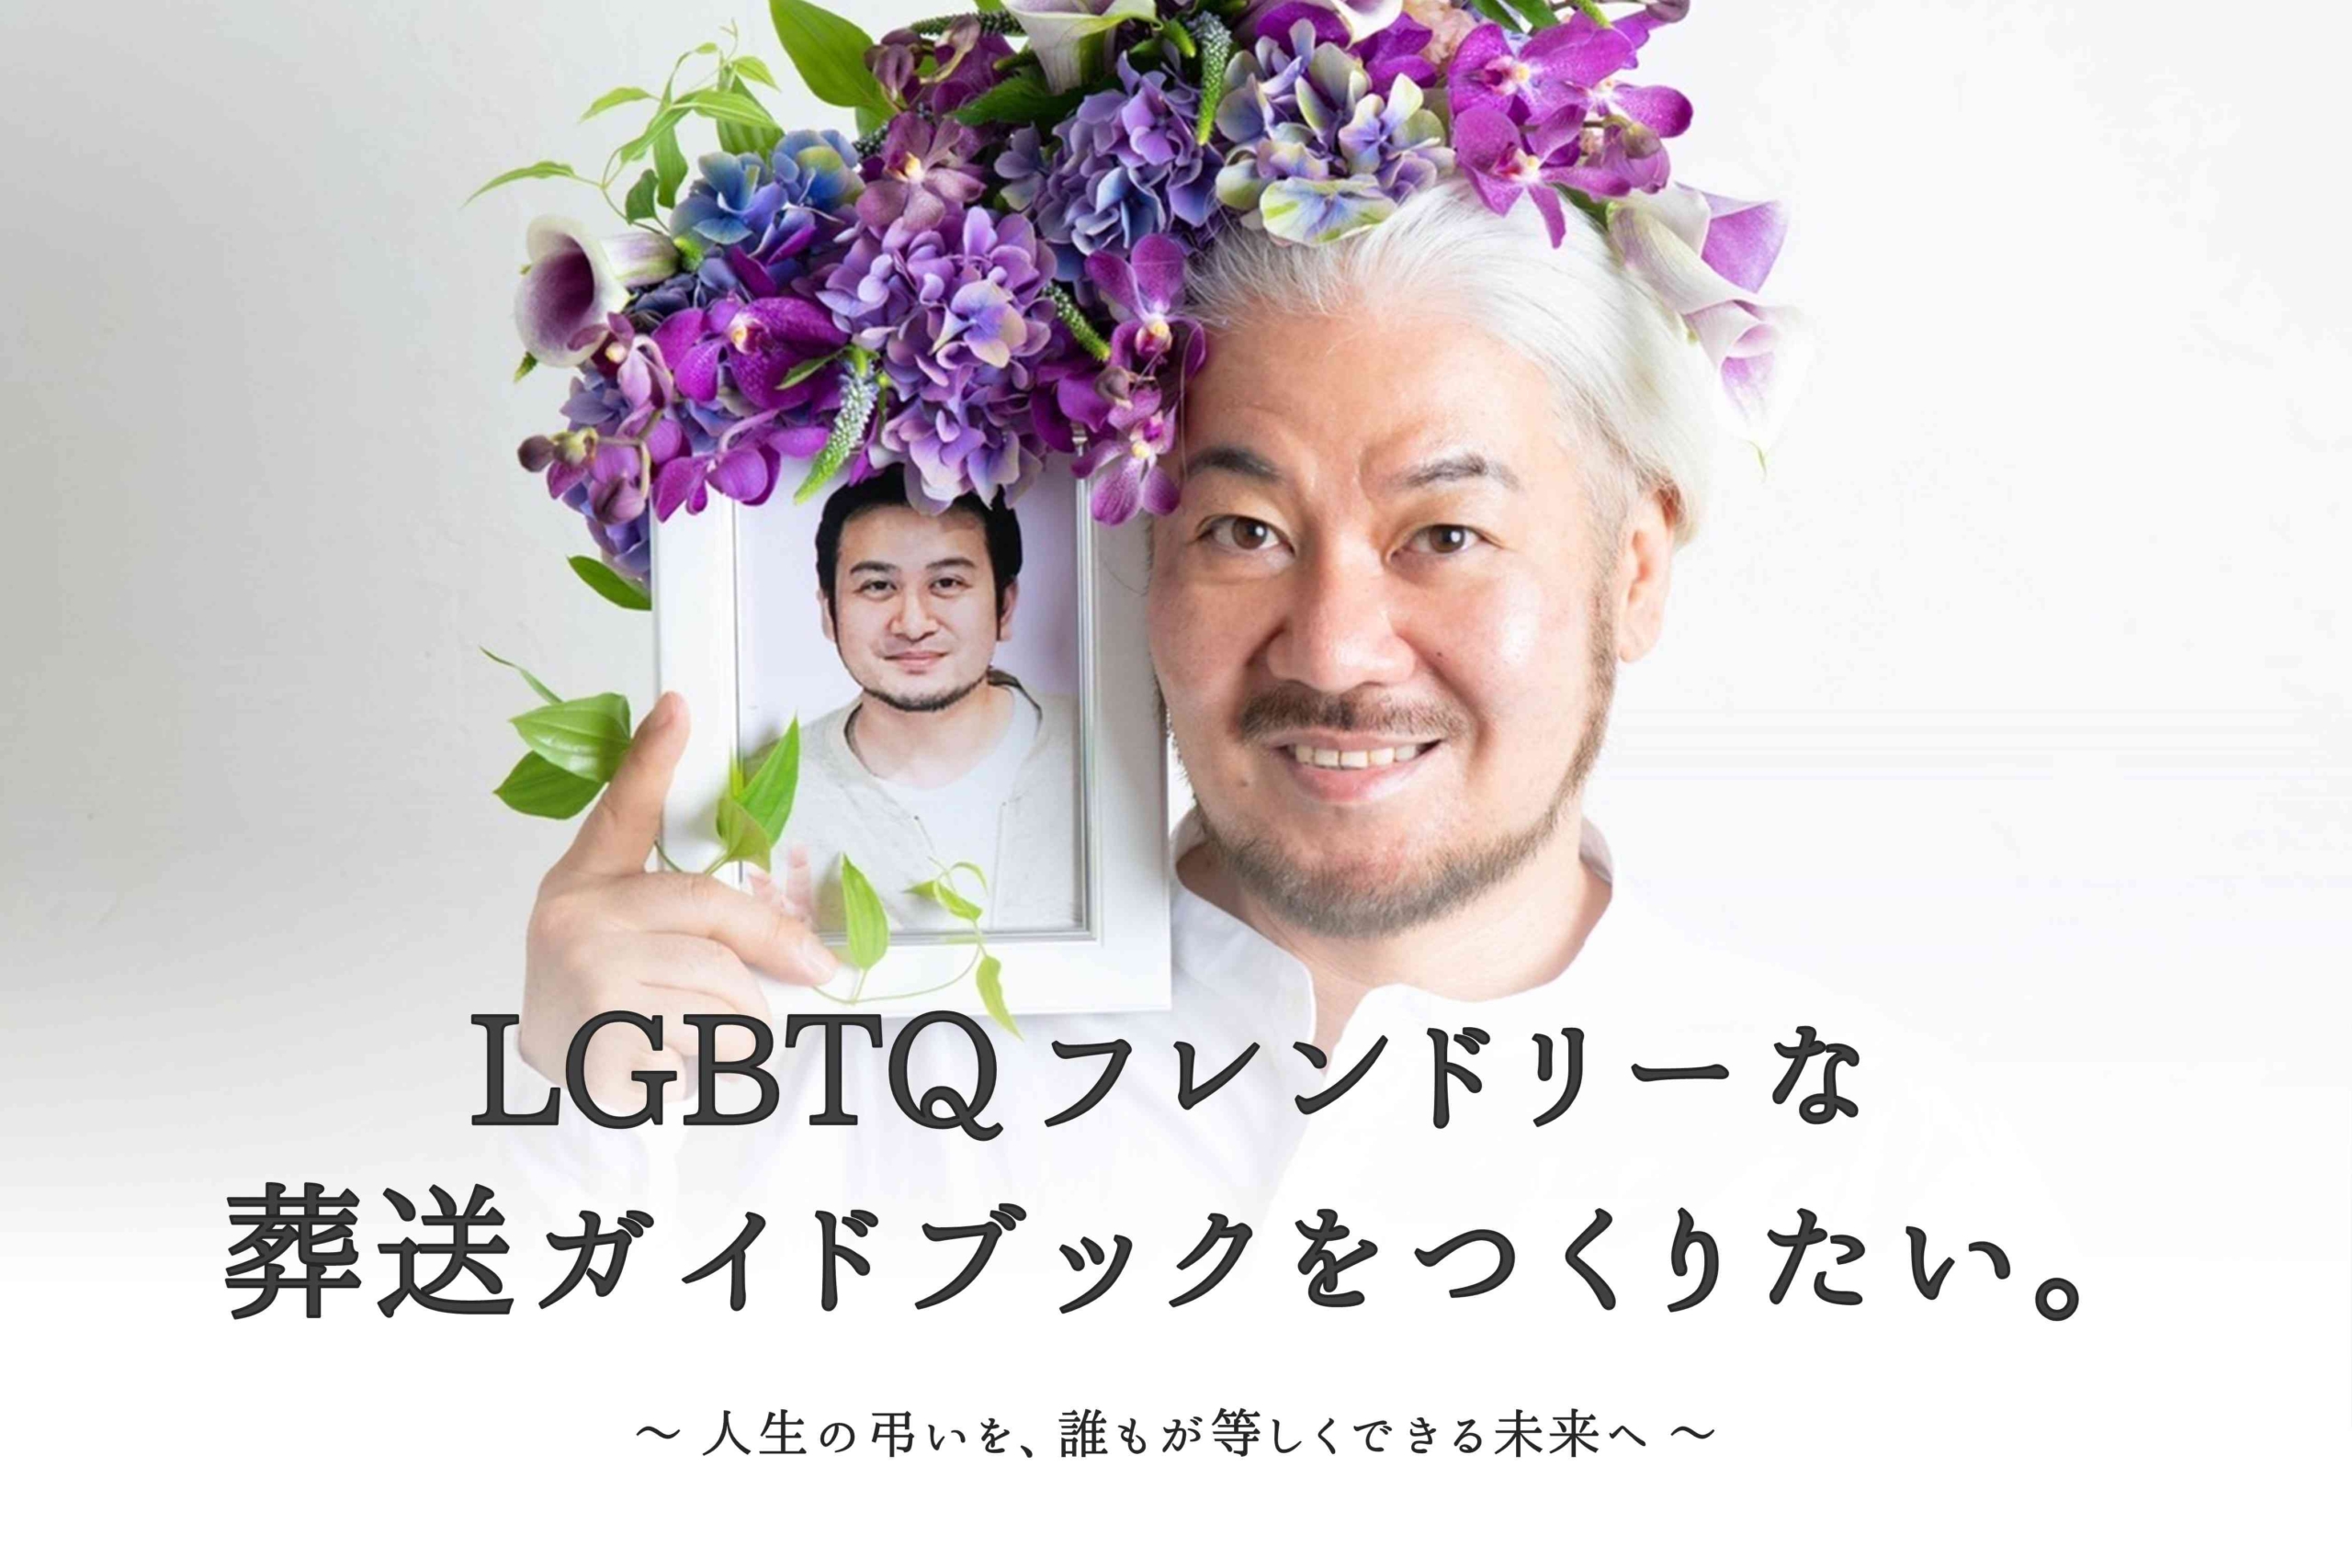 LGBTQ葬儀 (1)